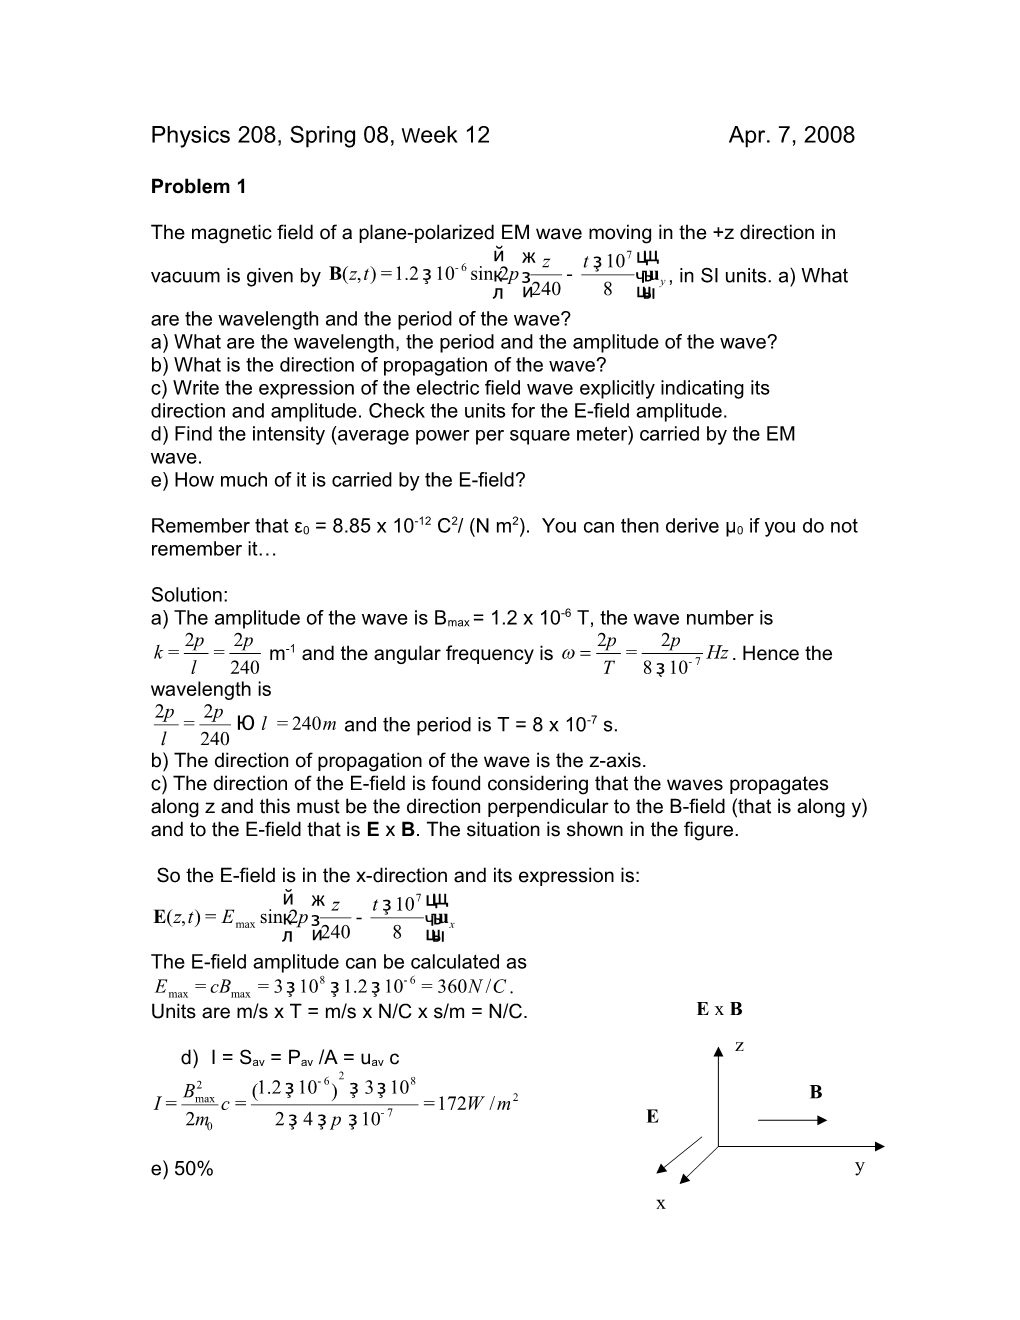 Physics 208, Fall 07, Group Problem 5